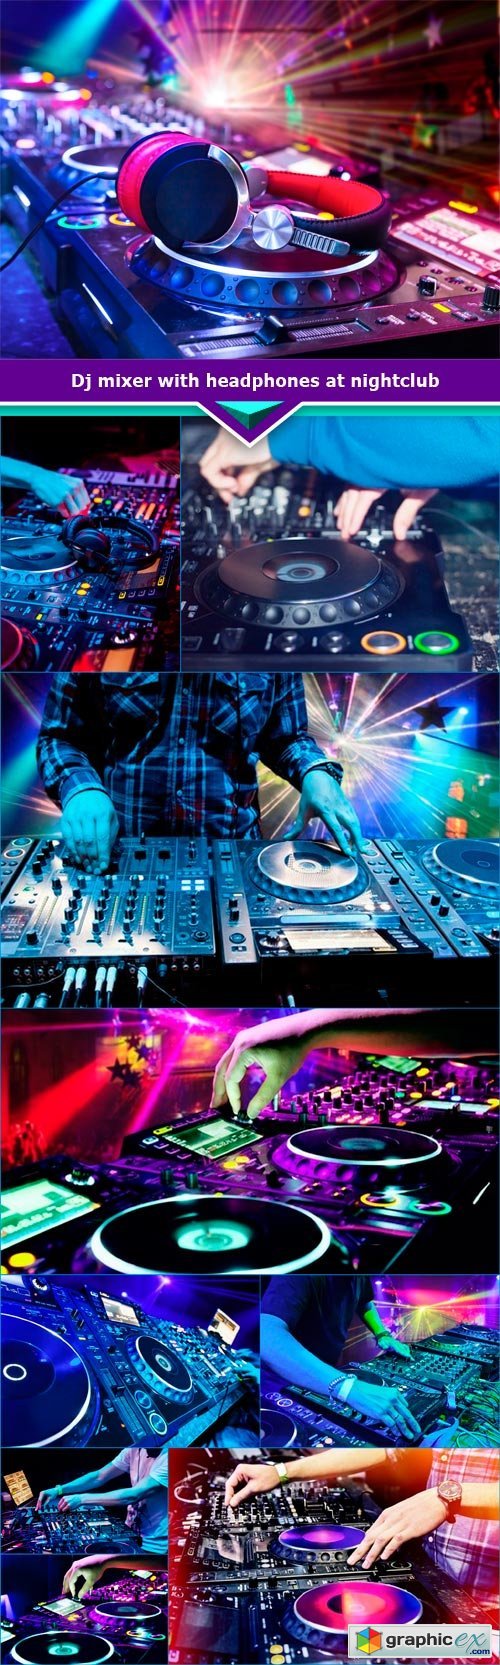 Dj mixer with headphones at nightclub 10x JPEG